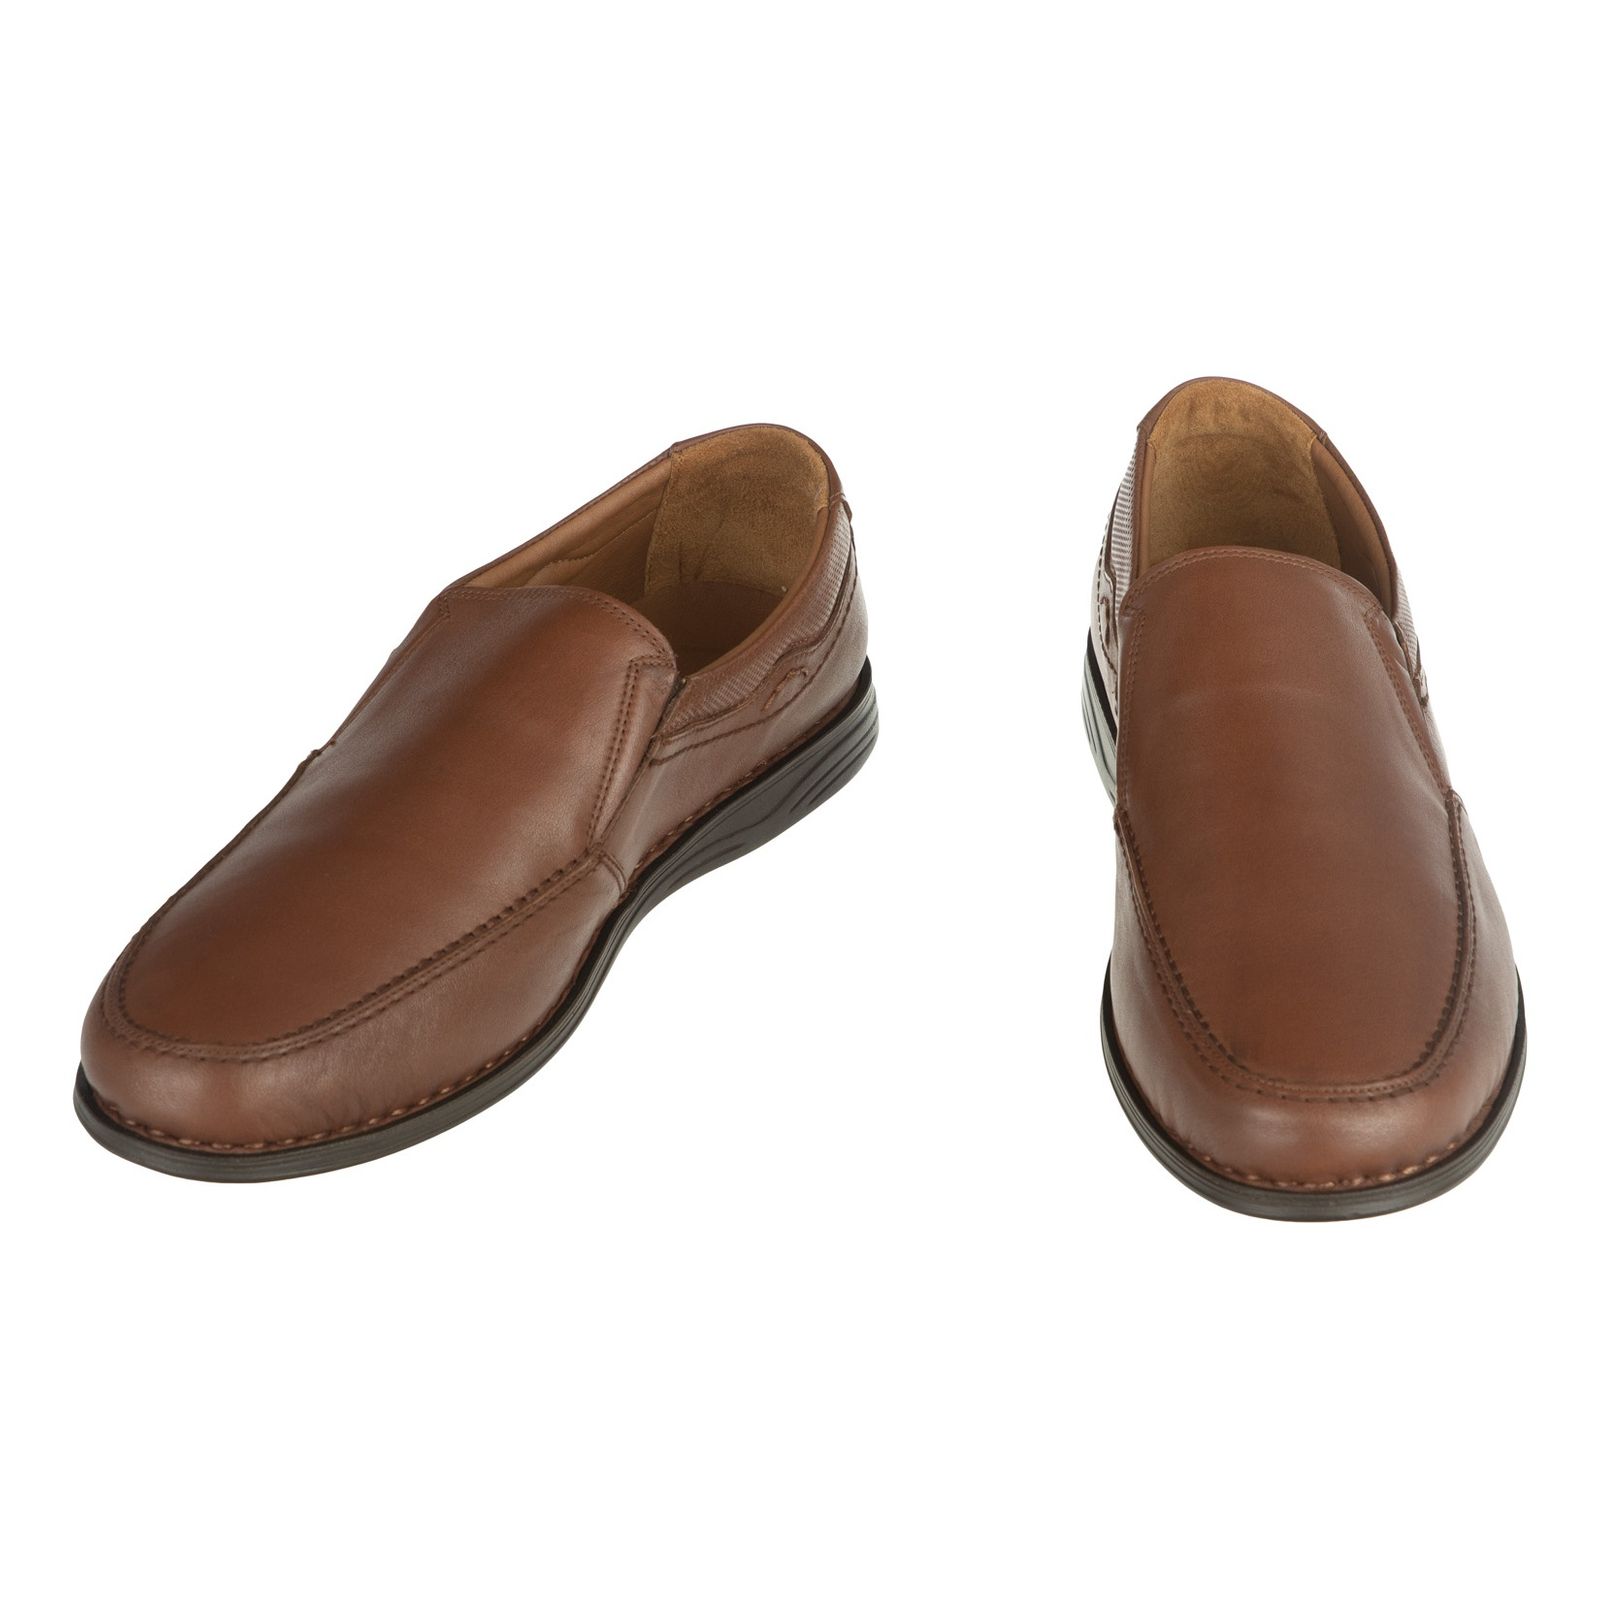 کفش روزمره مردانه پولاریس مدل 100296913-122 - قهوه ای - 6